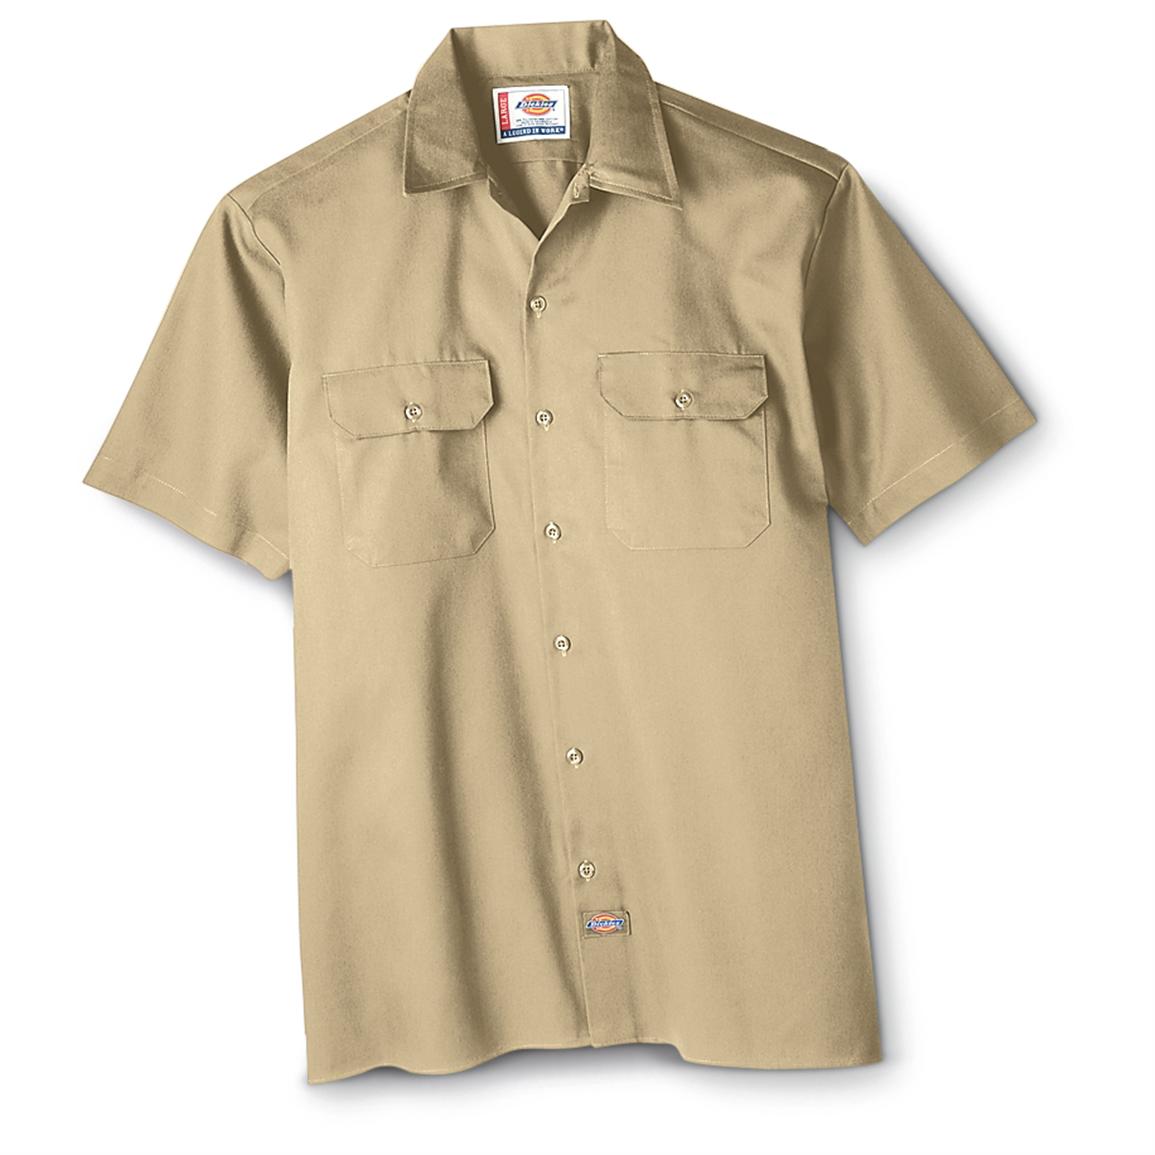 Dickies Men's Short Sleeve Workshirt - 185498, Shirts at Sportsman's Guide